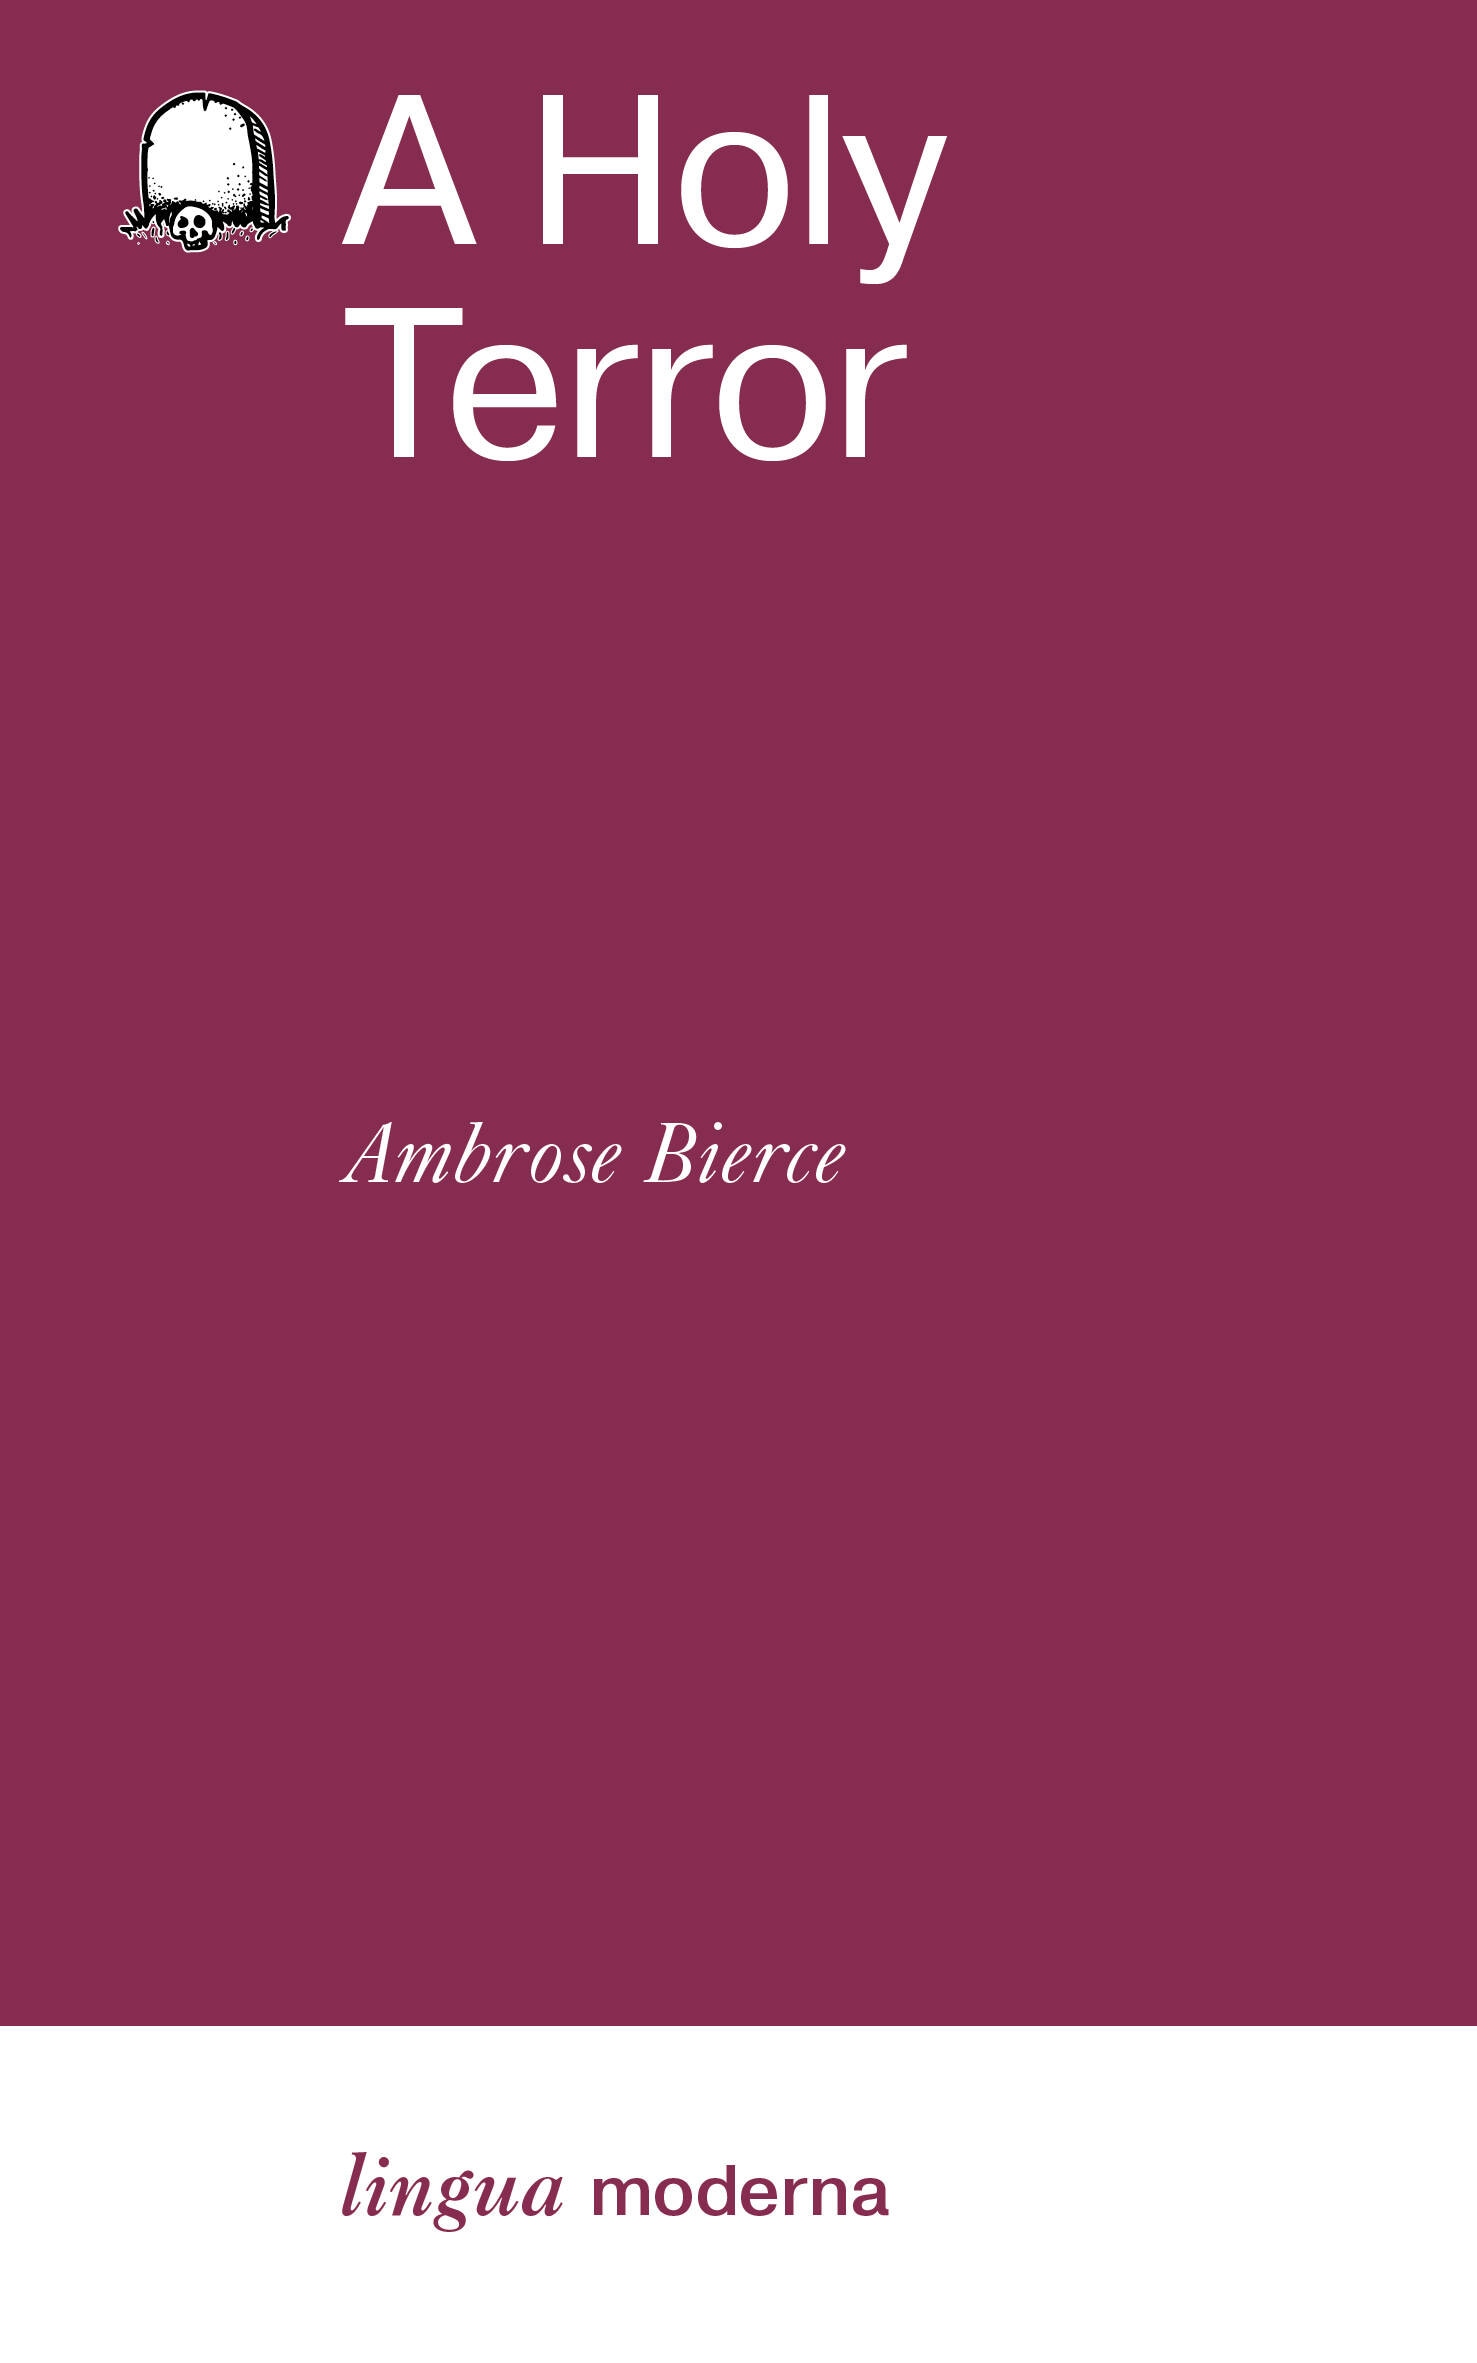 Book “A Holy Terror” by Амброз Бирс — 2024